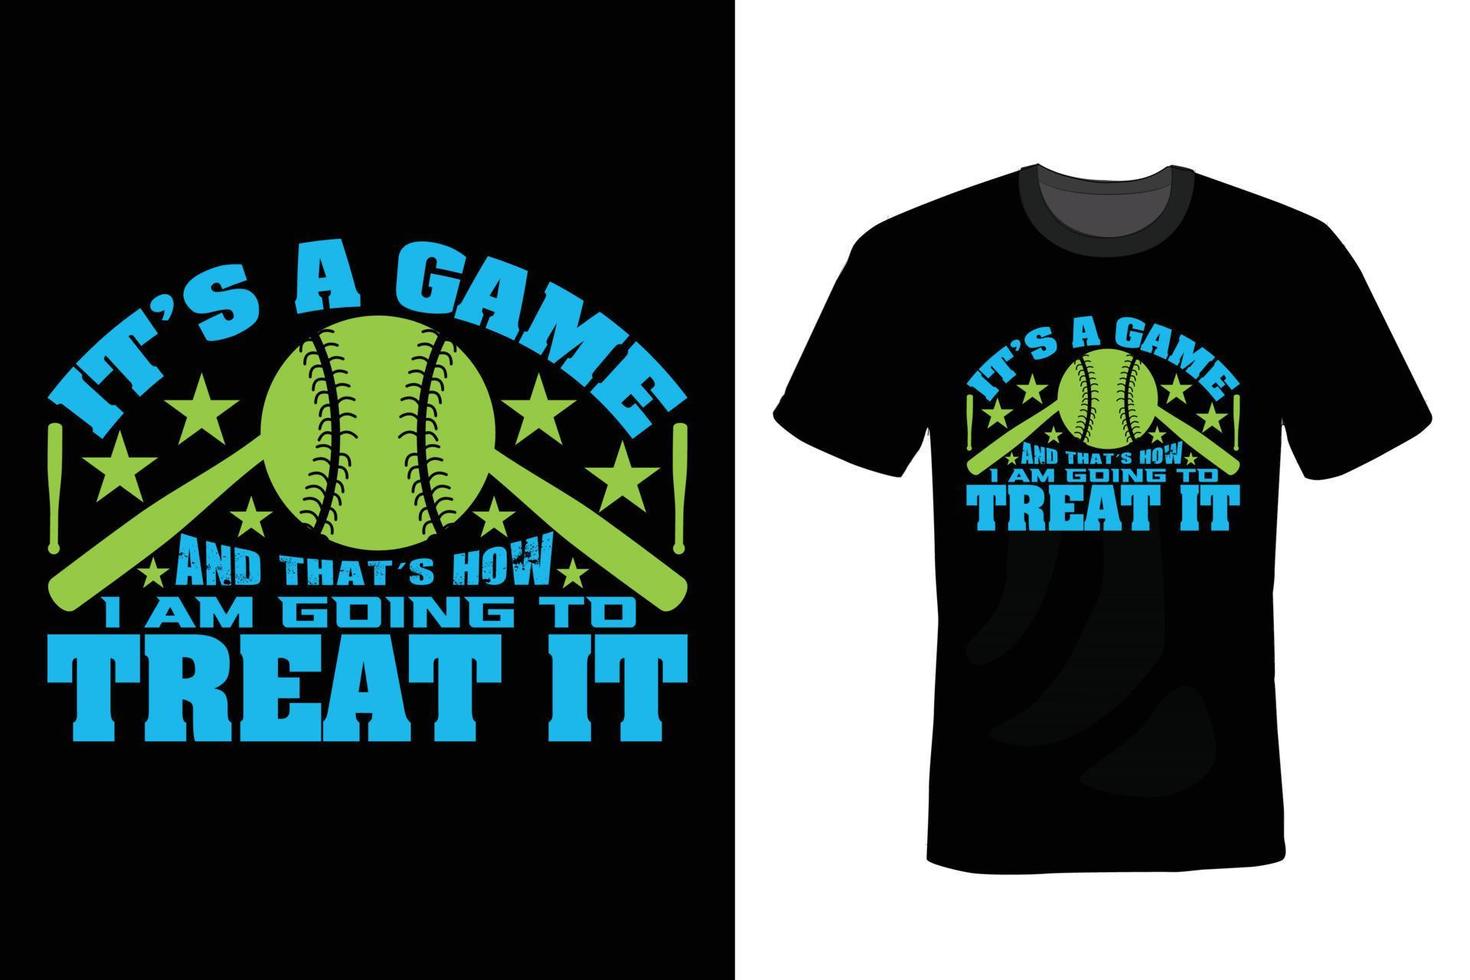 Baseball T shirt design, vintage, typography vector